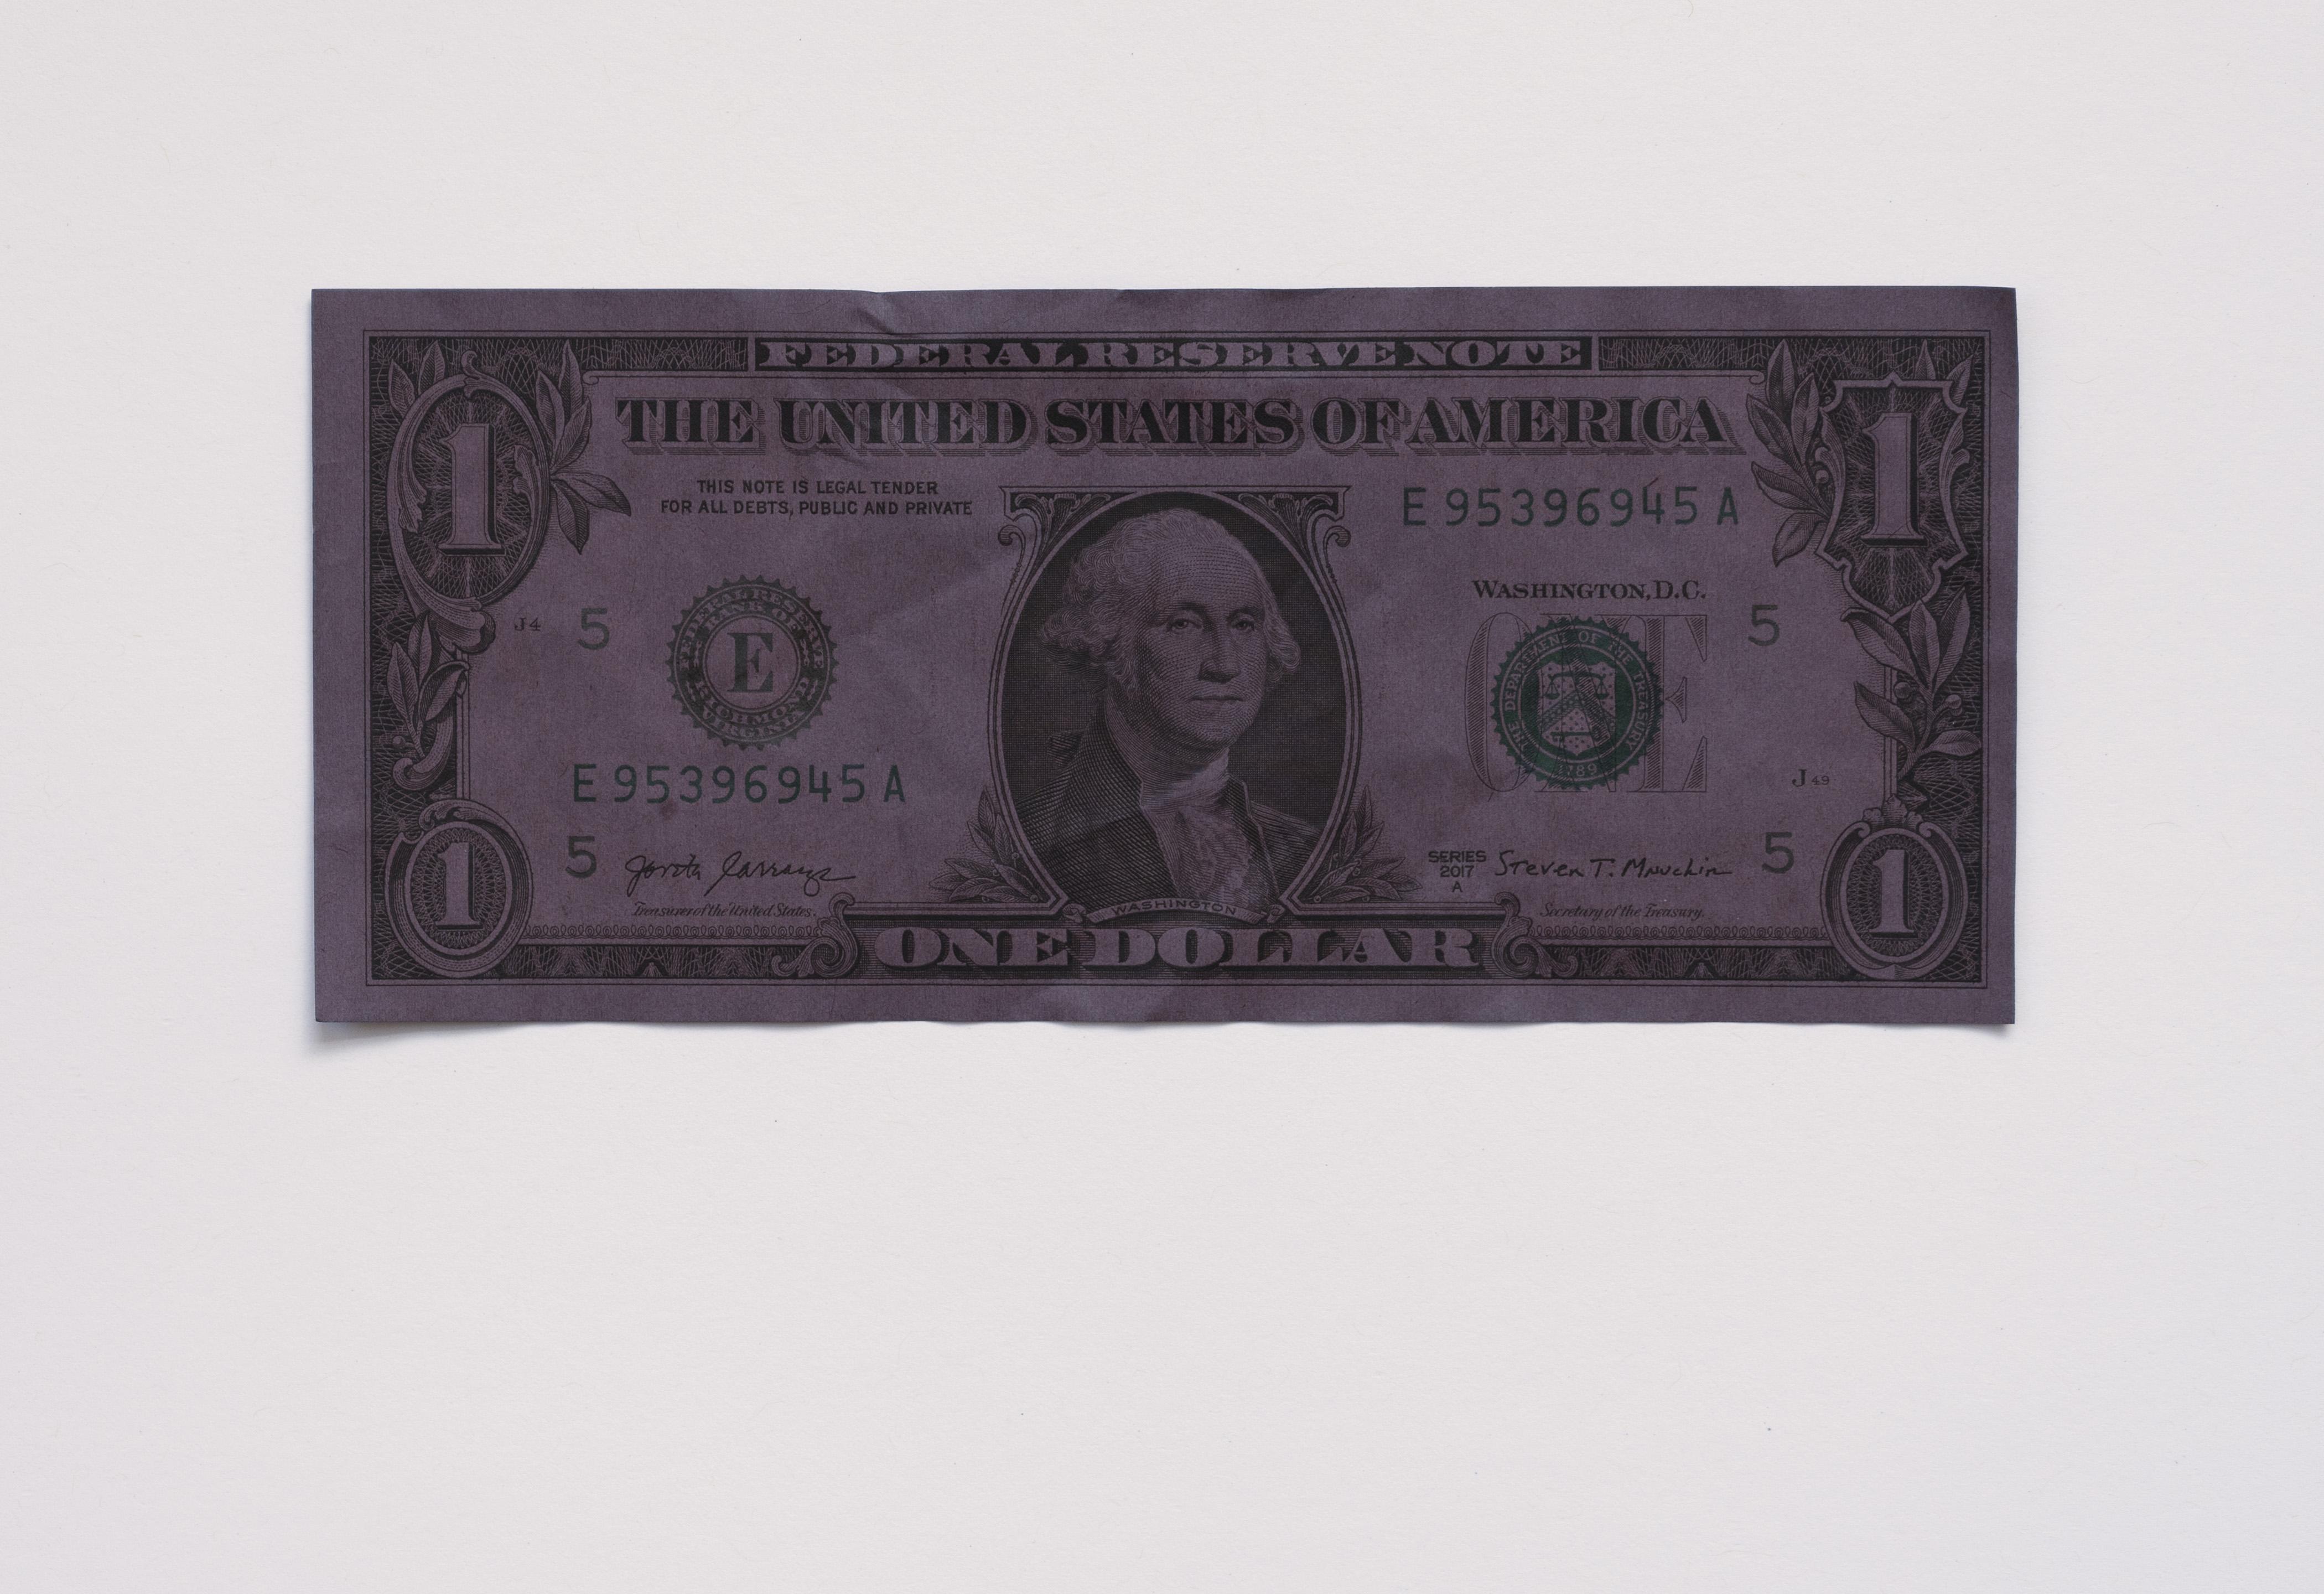 one dollar bill front